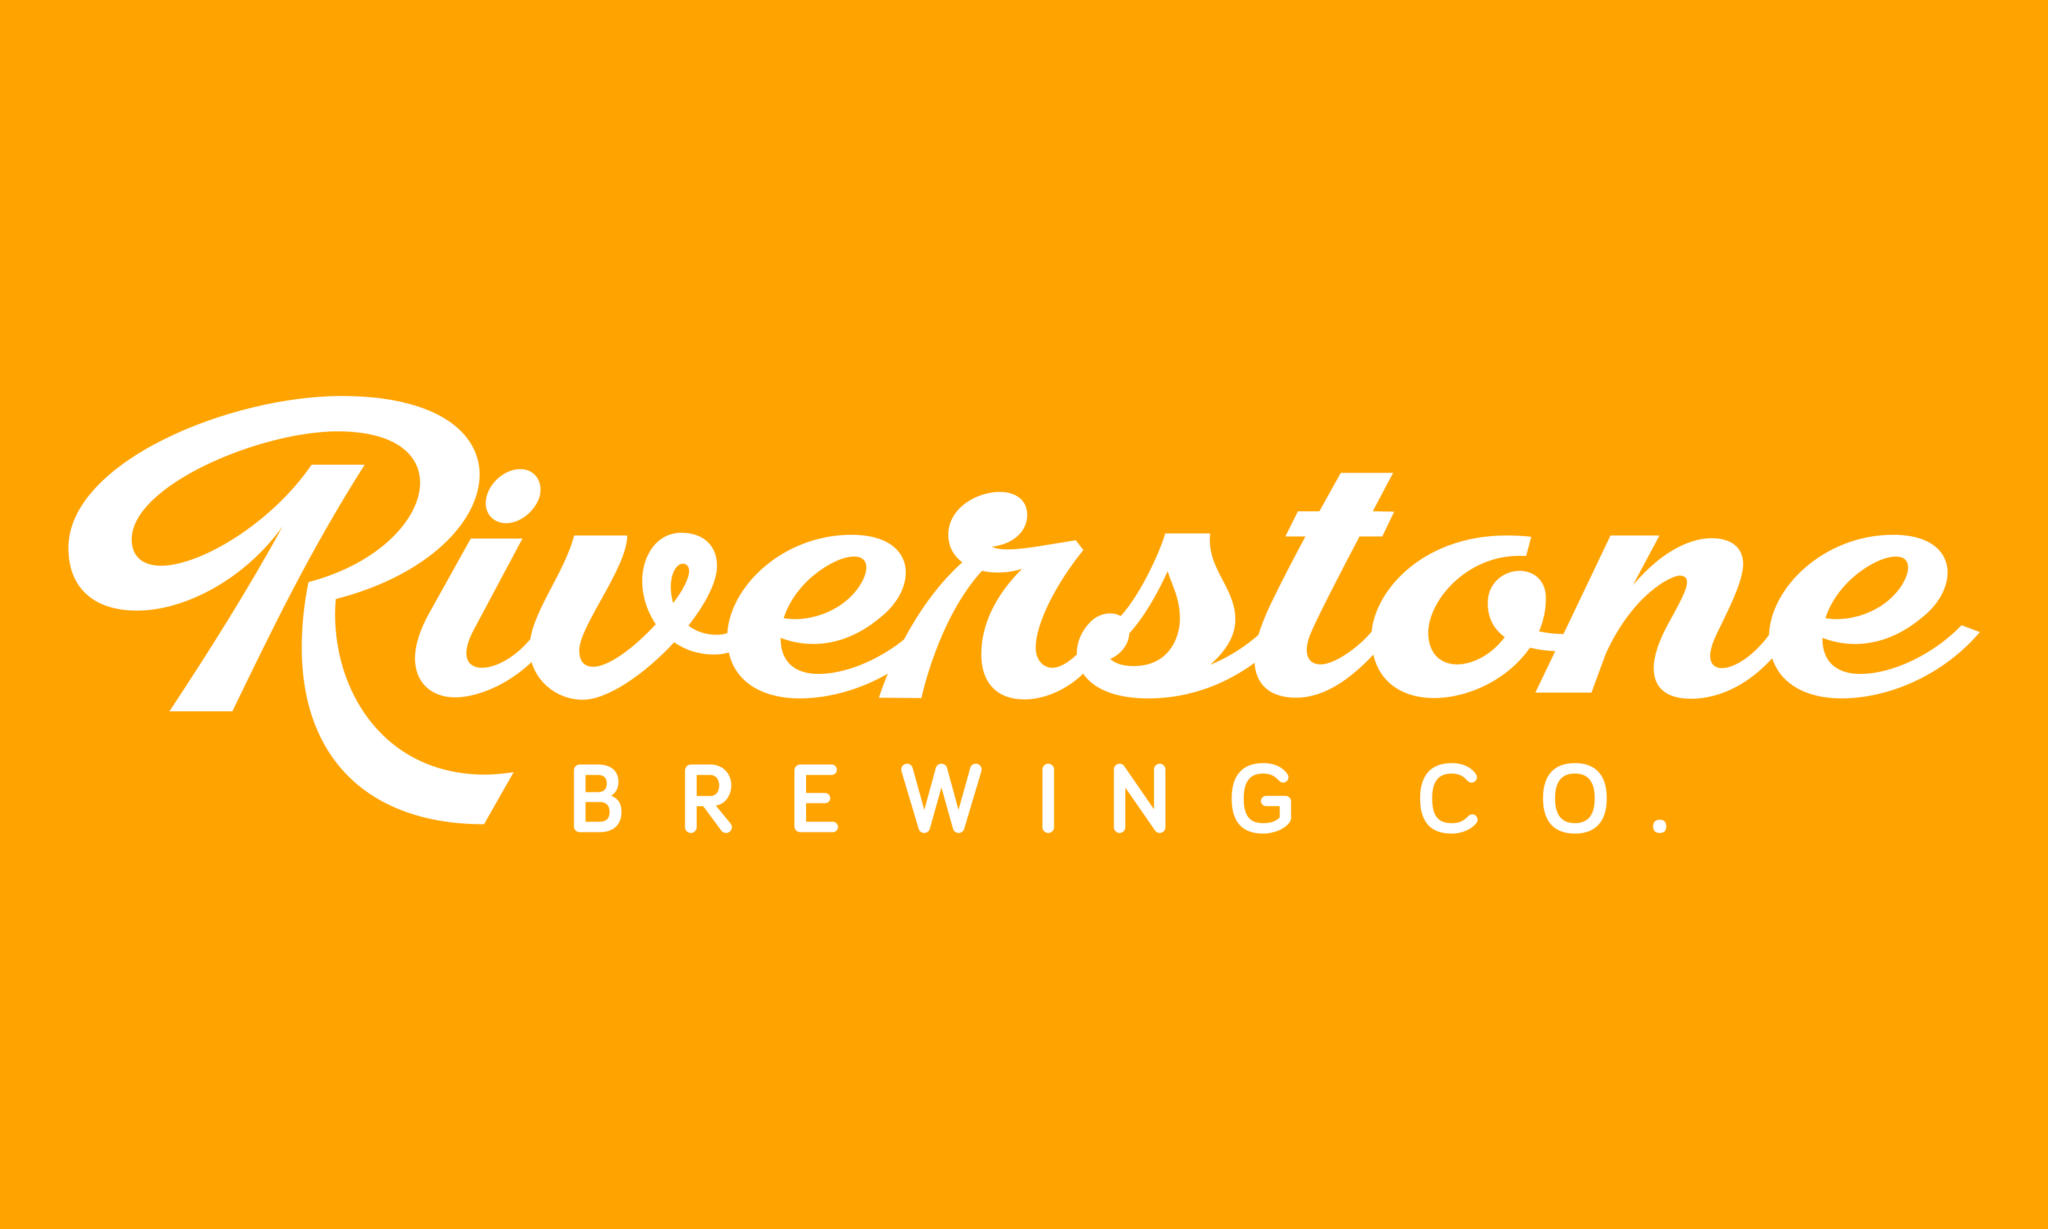 Riverstone Brewing Company